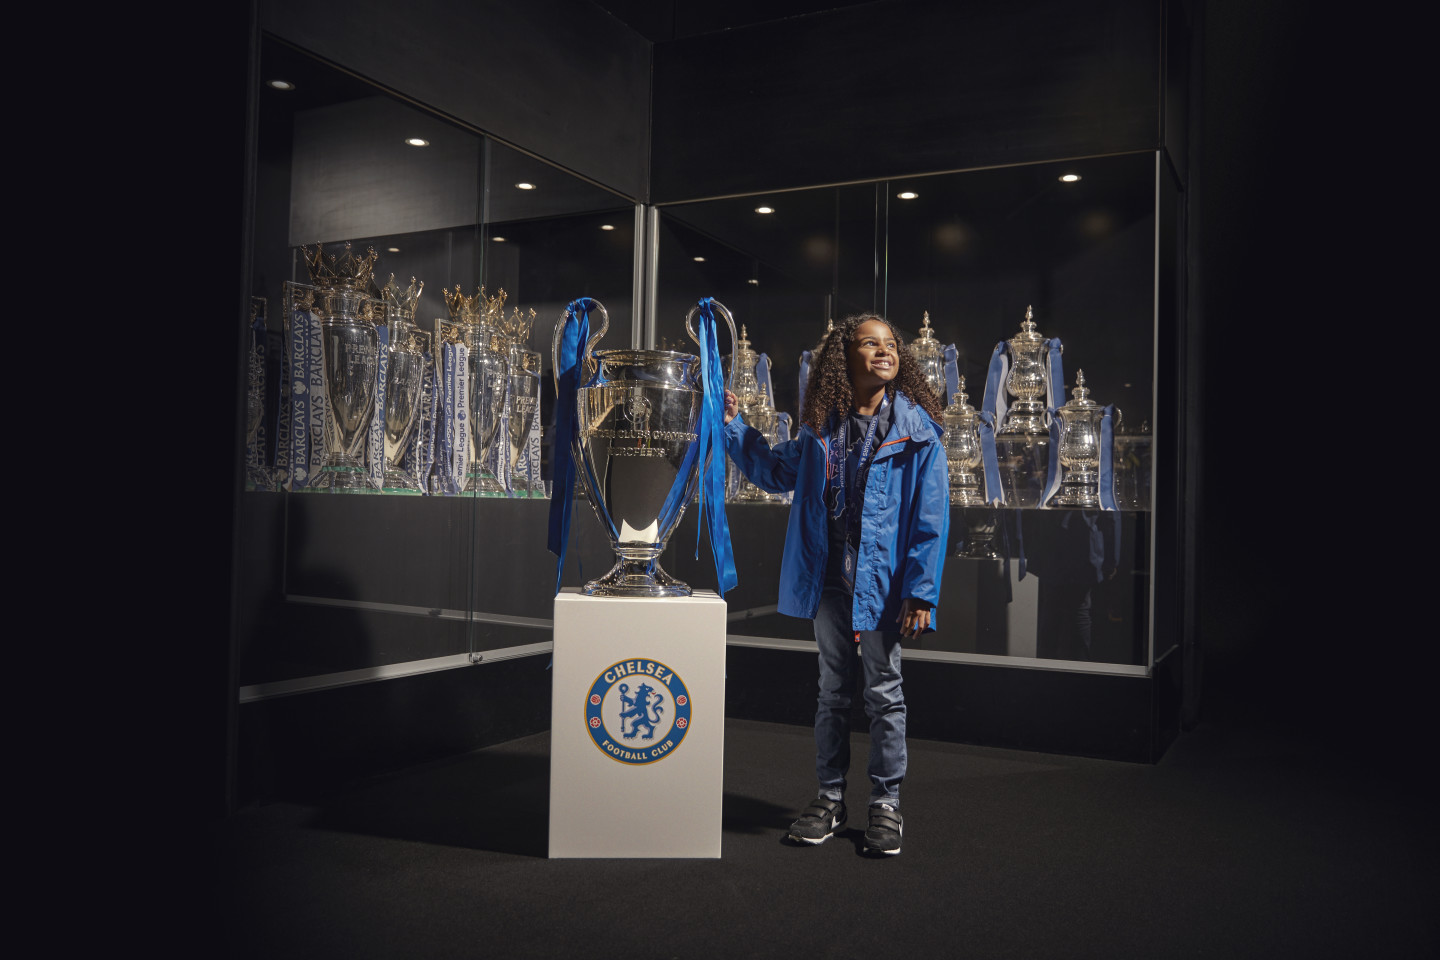 London: Chelsea Football Club Stadium and Museum Tour